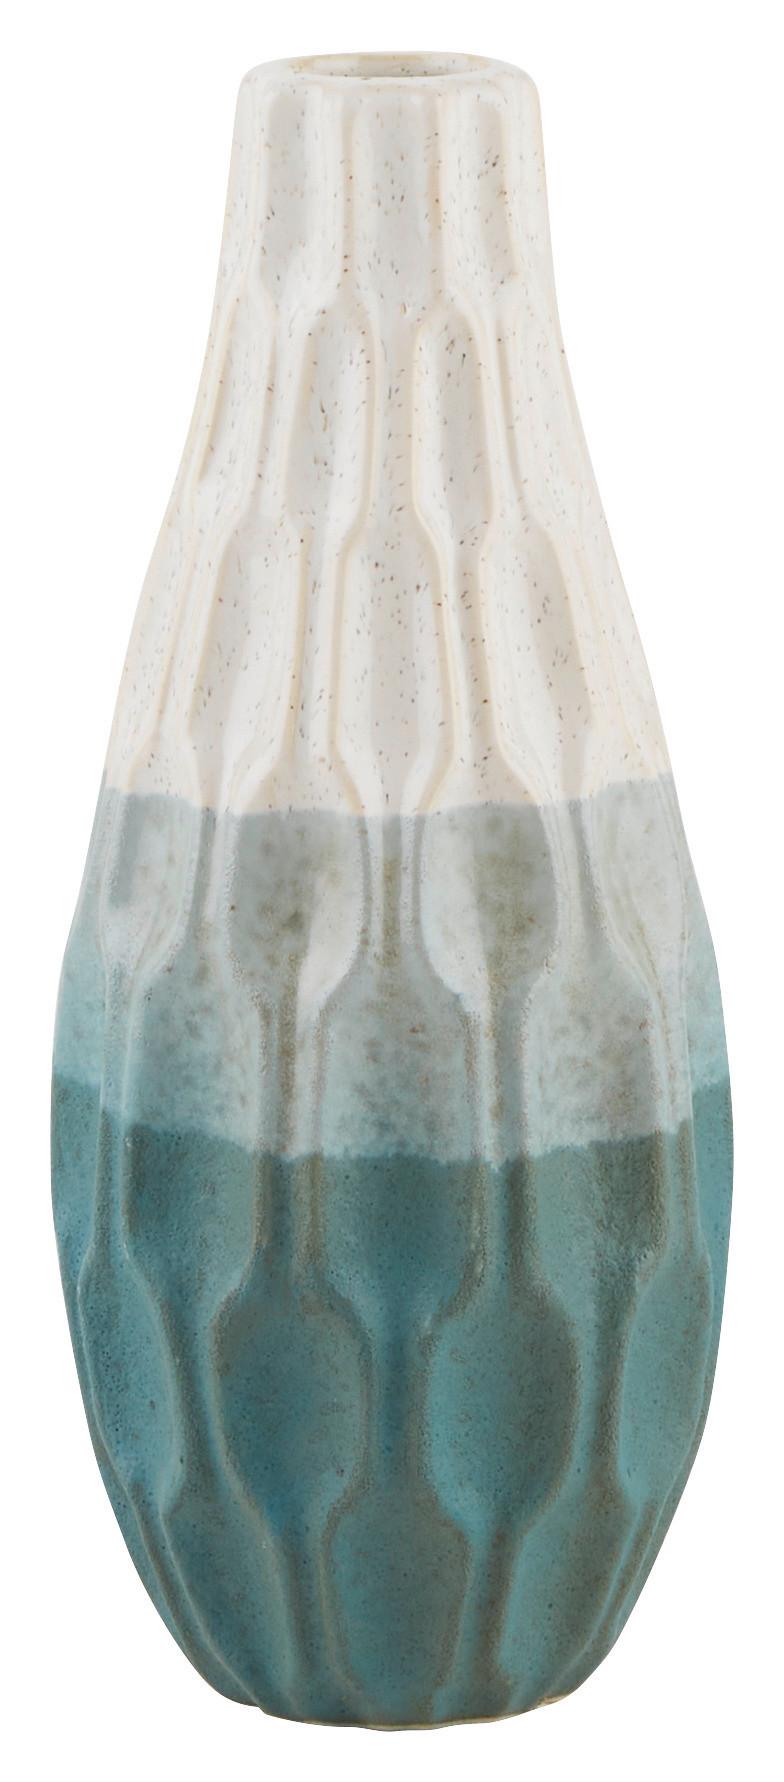 Vaza Inma I -Paz- - krem barve/zelena, Basics, keramika (15/35cm) - Premium Living